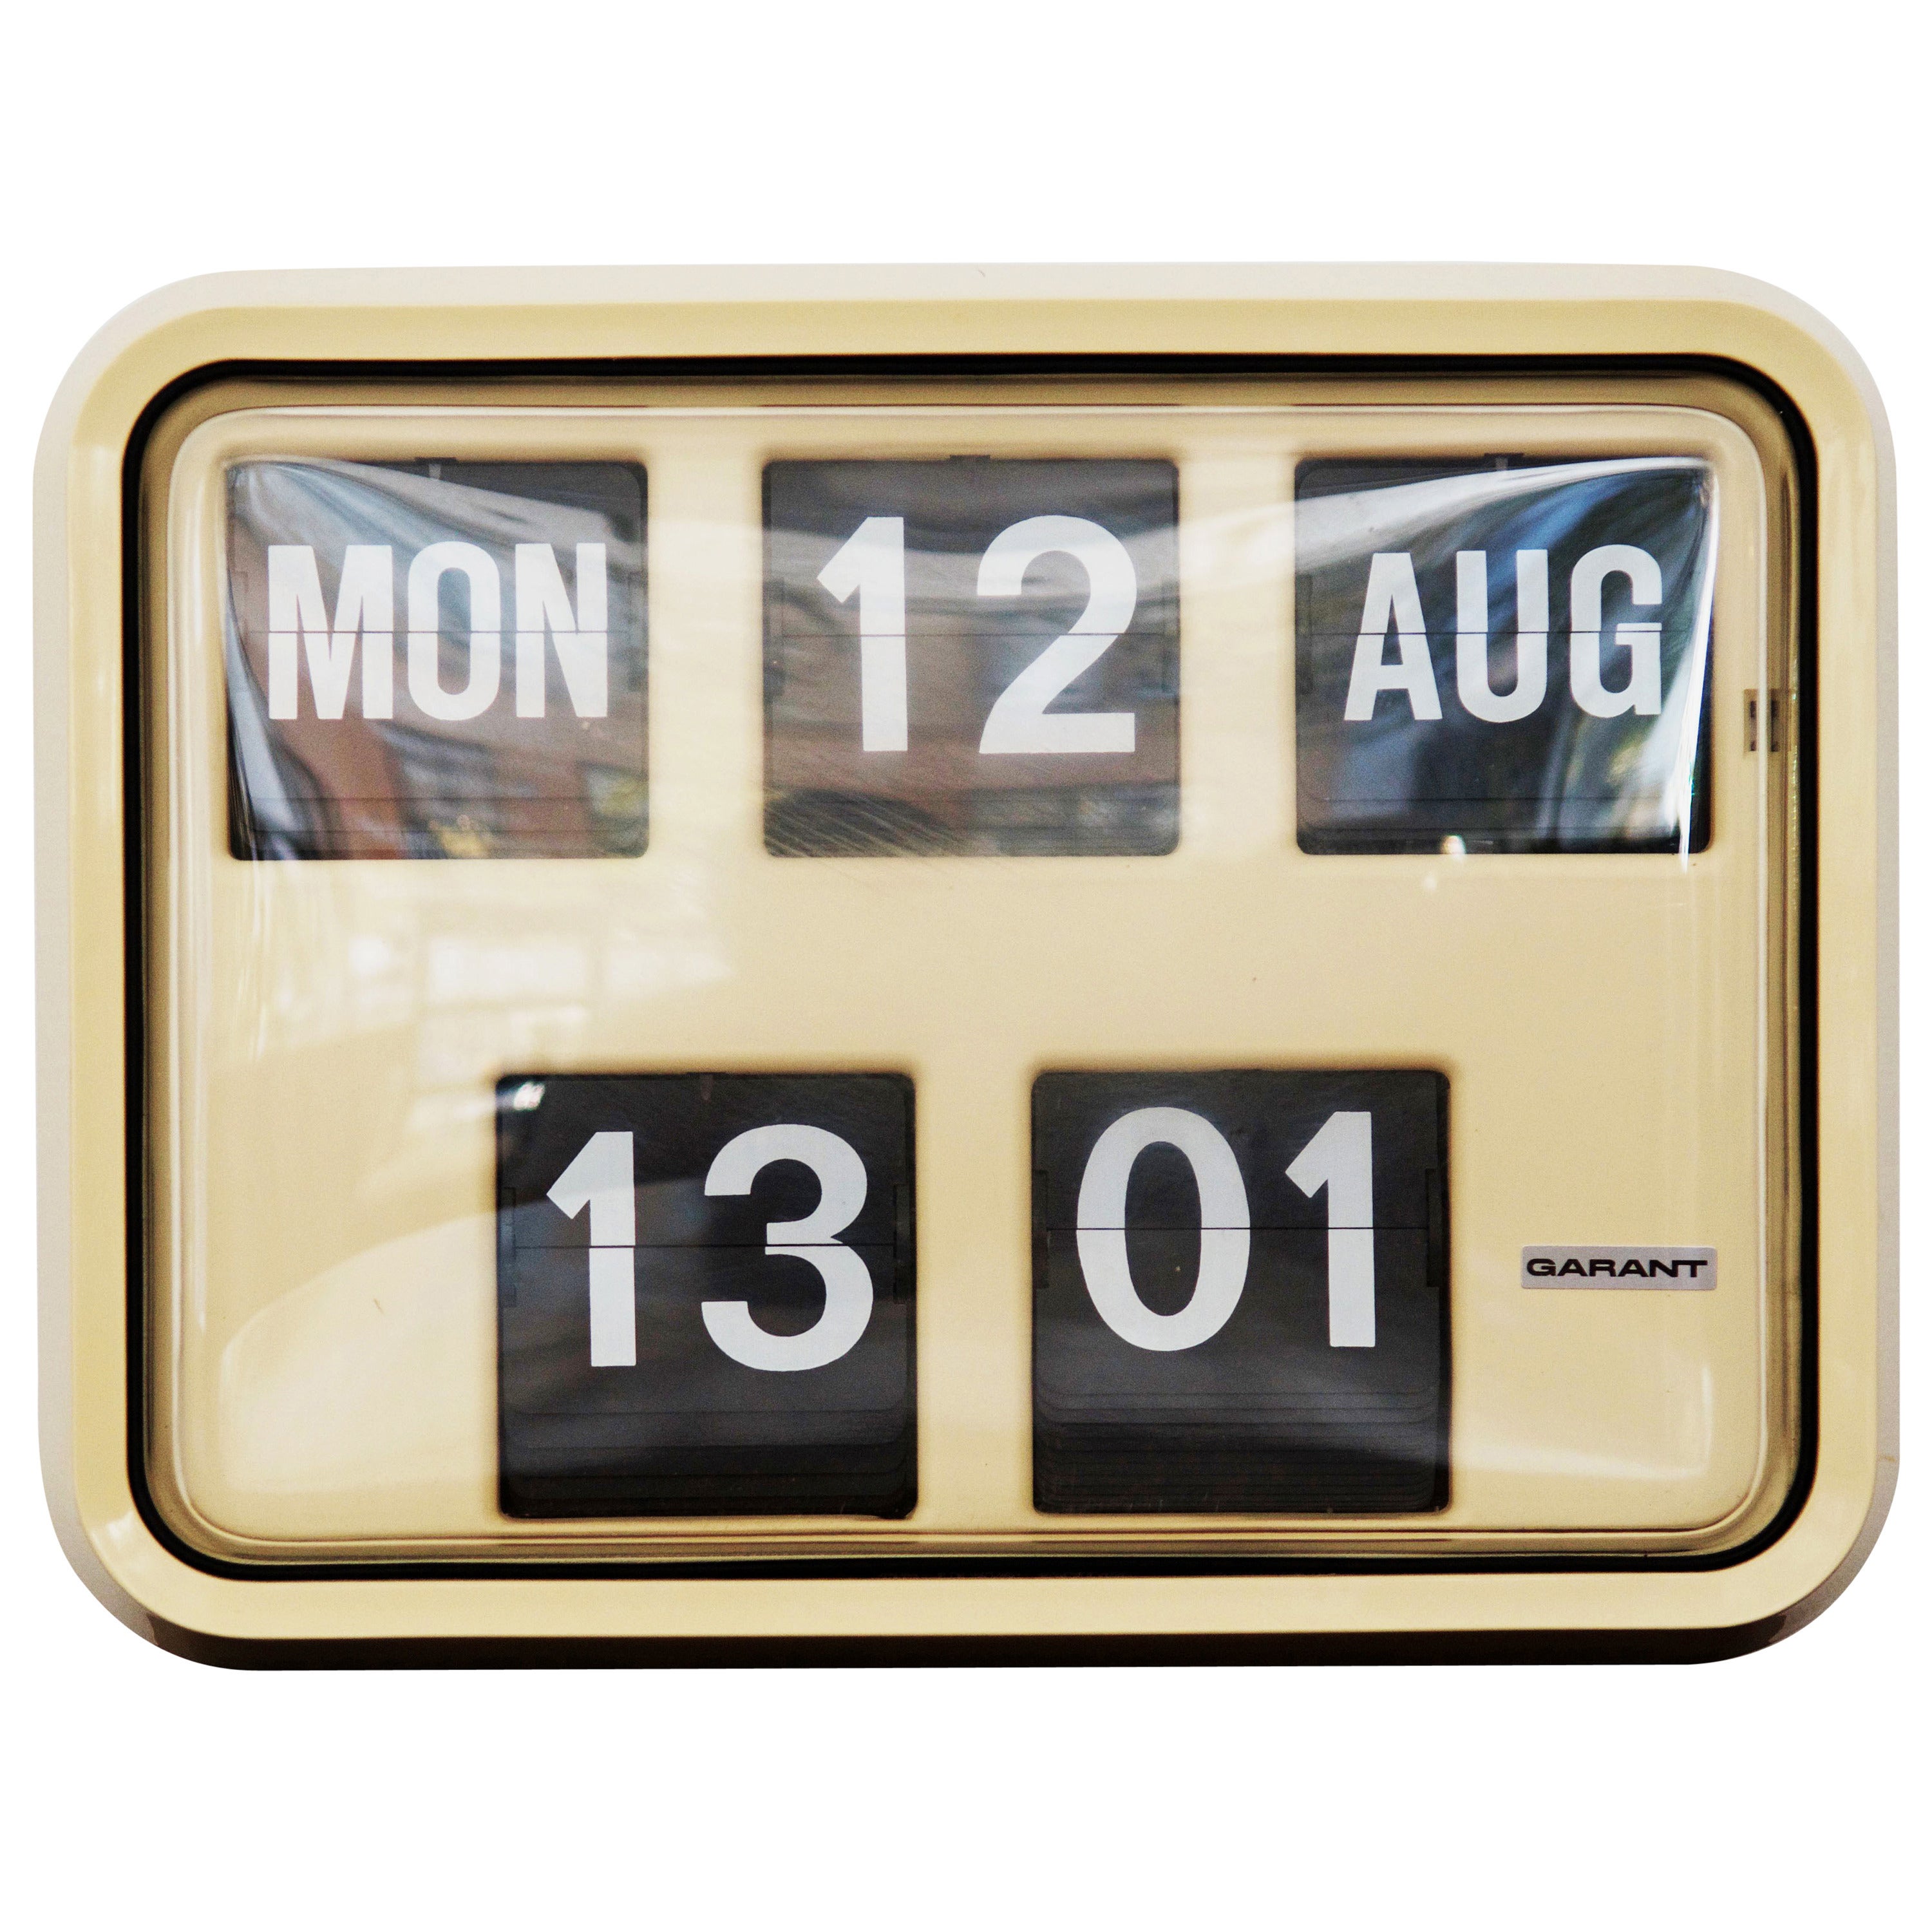 Flip Clock by Garand from 1970s